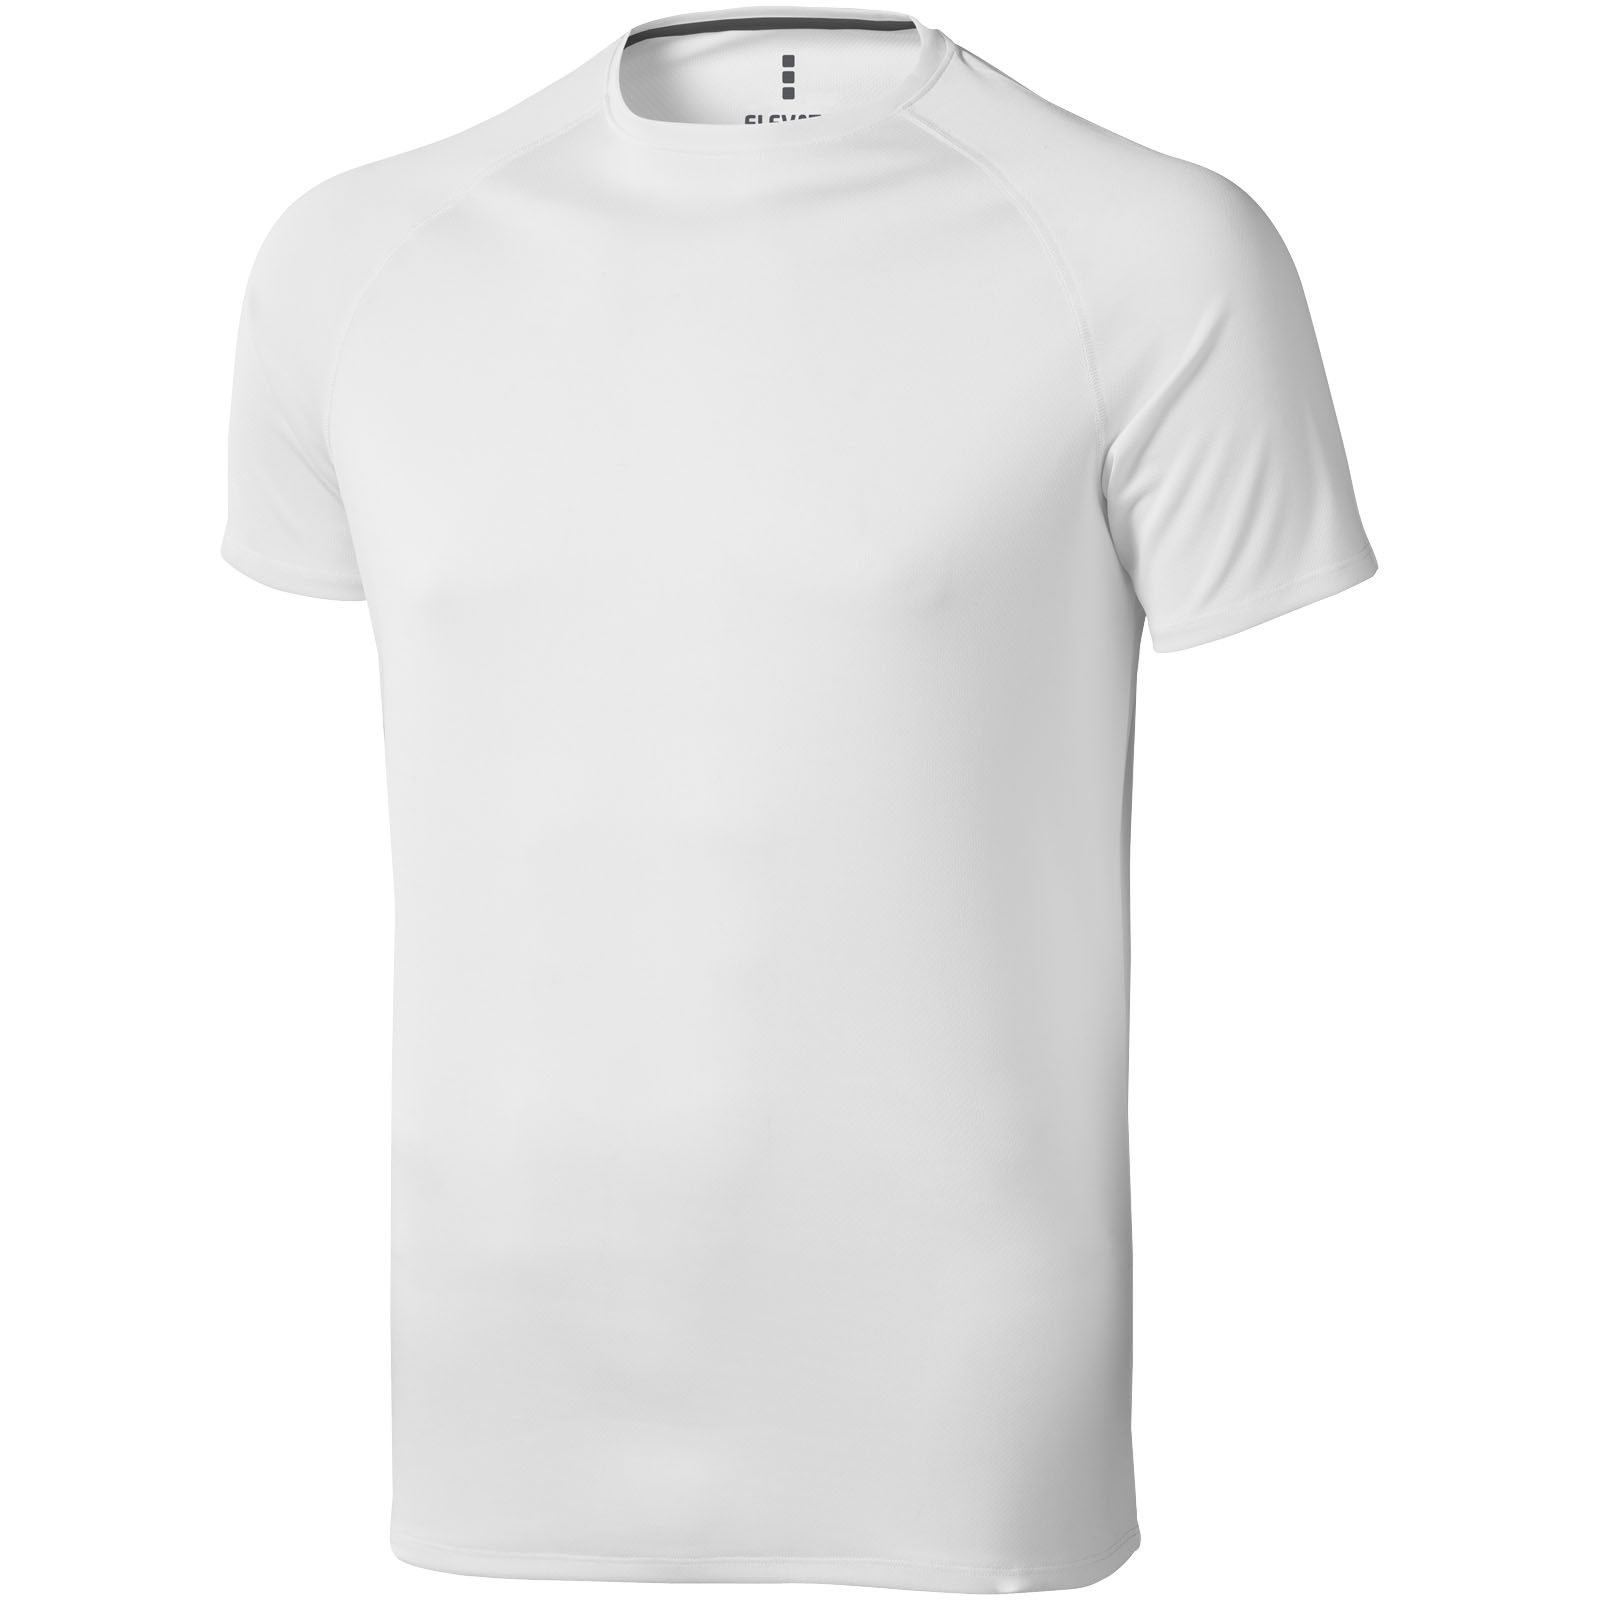 Advertising T-shirts - Niagara short sleeve men's cool fit t-shirt - 0